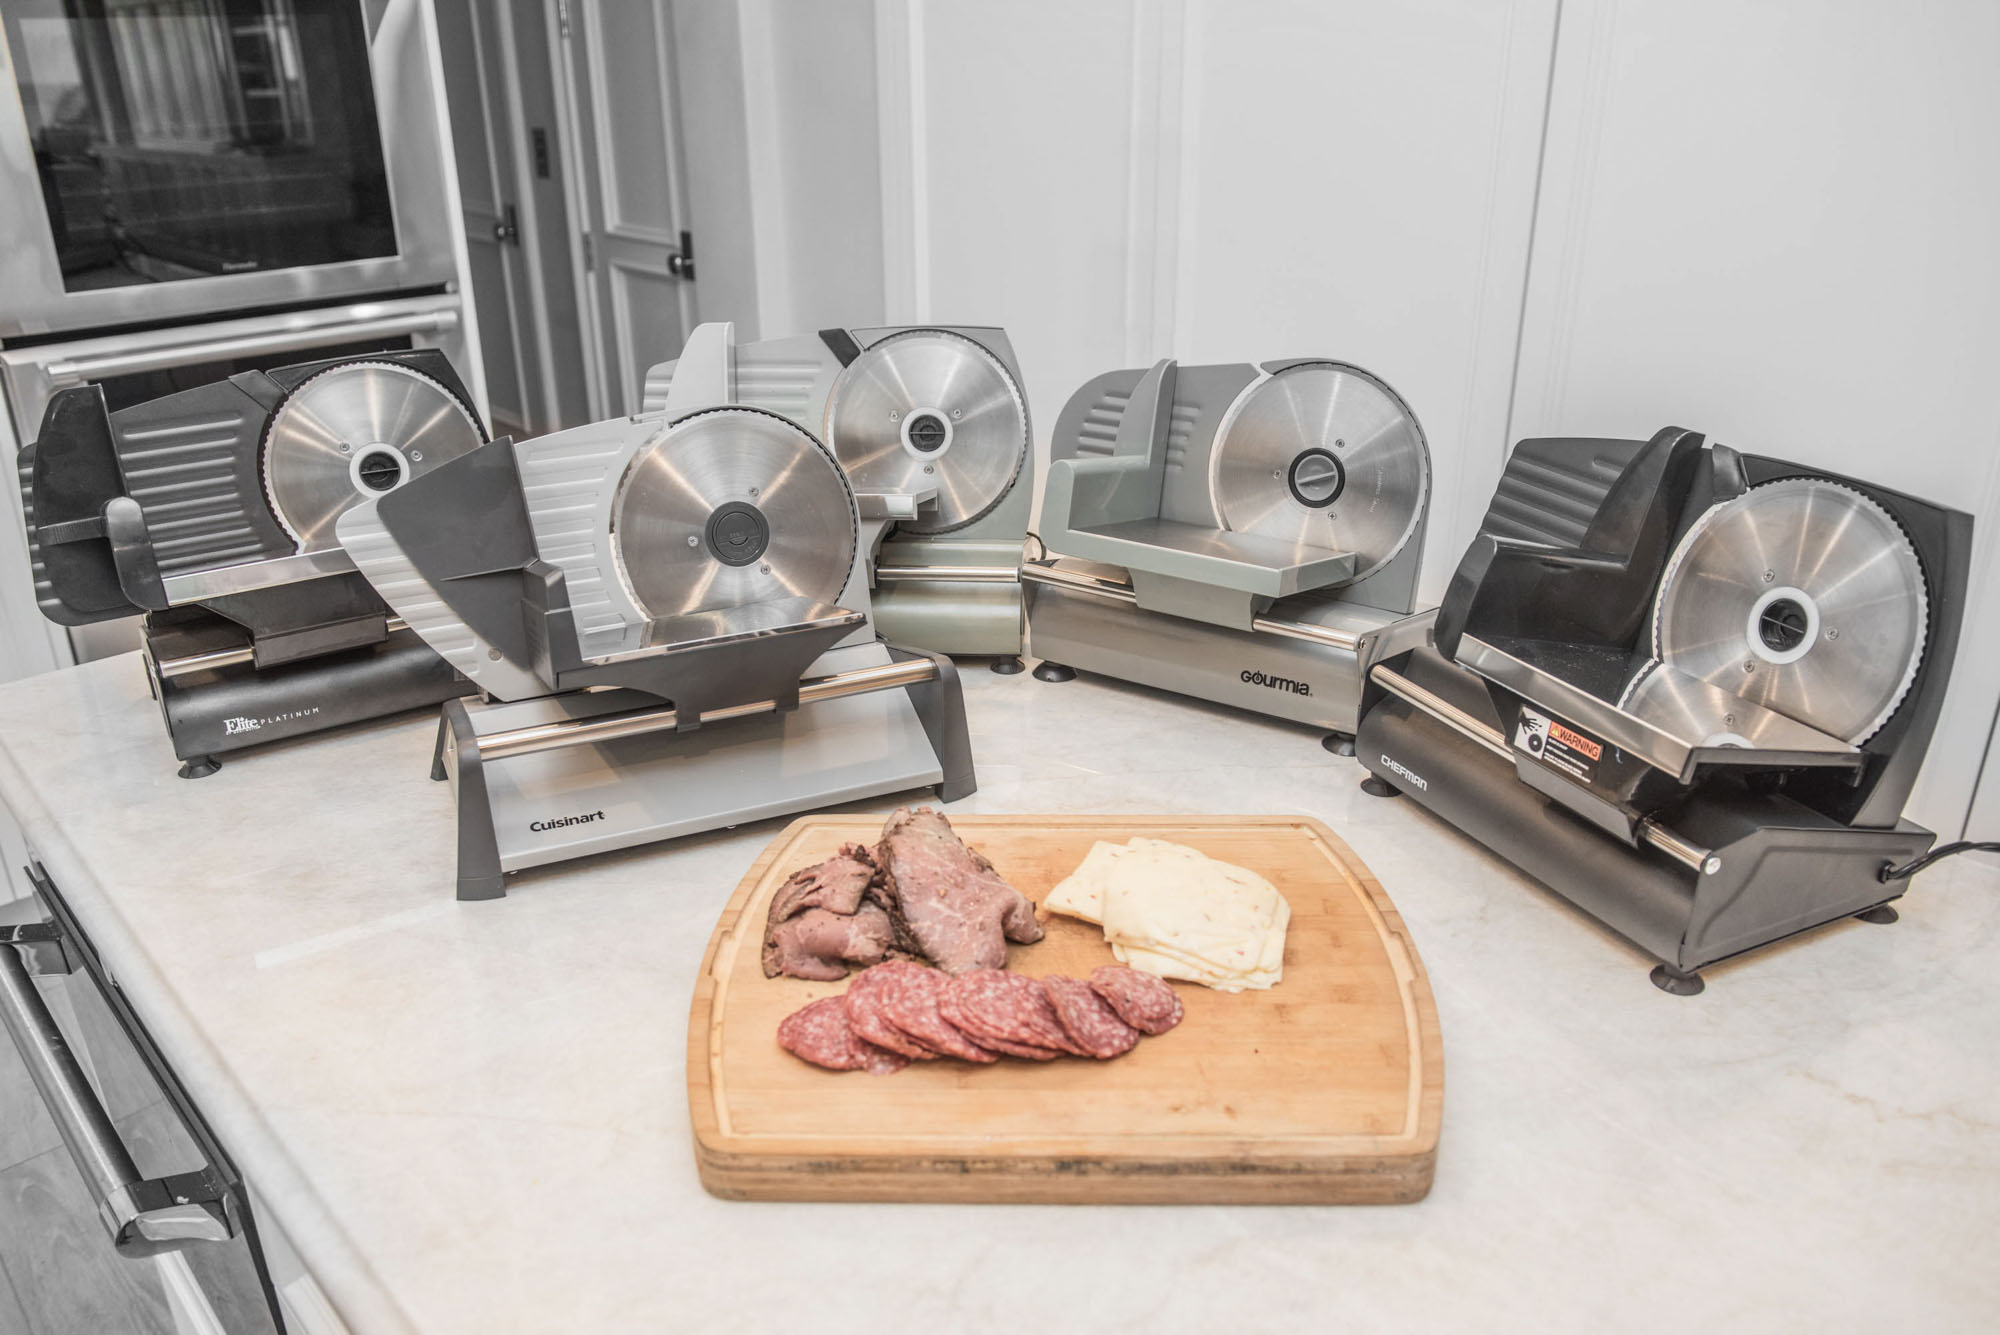 Stainless Steel Ham Slicer Machine Salami Slicer Meat Slicer Competitive  Price